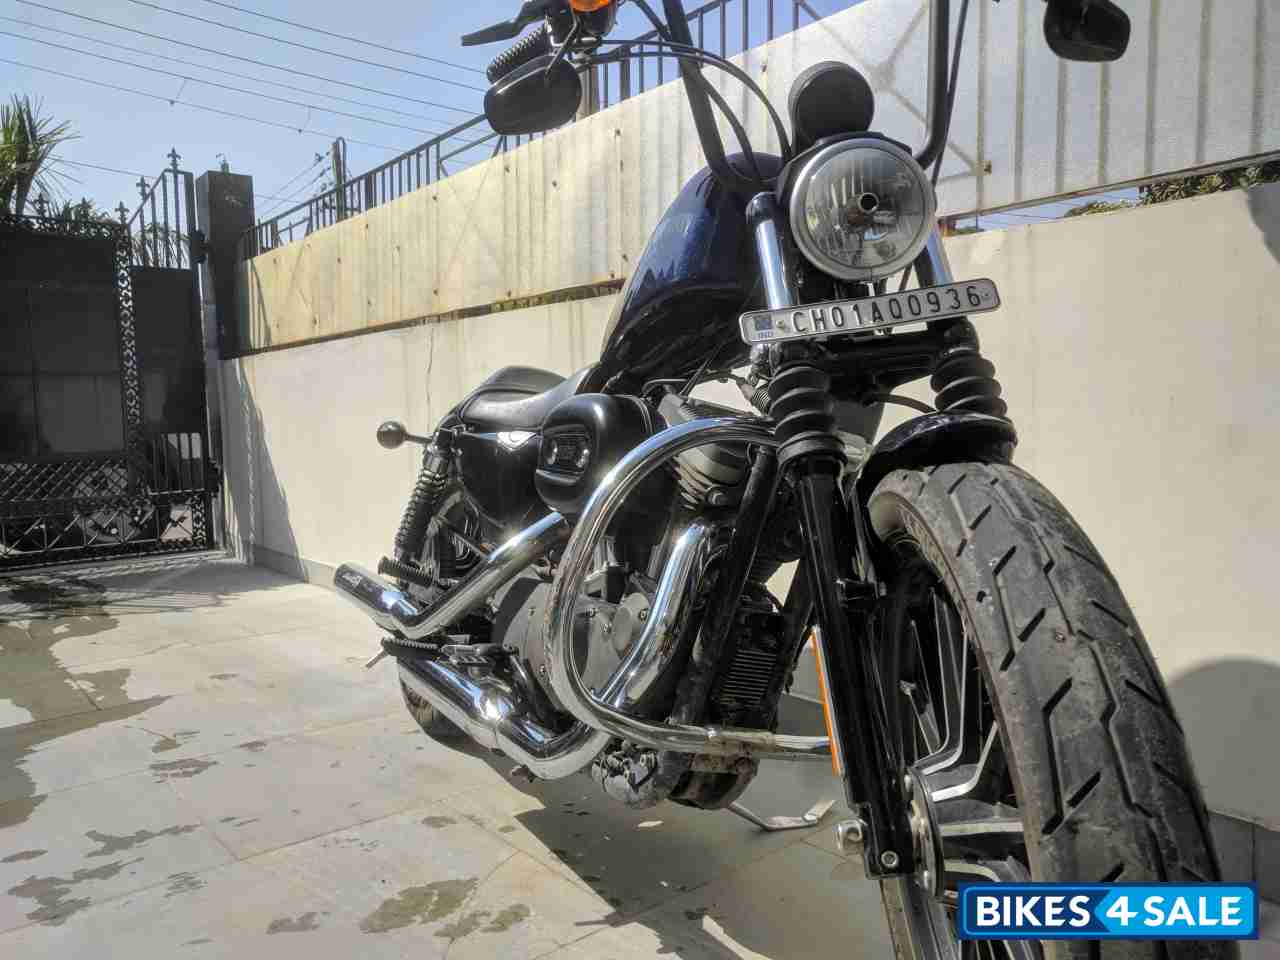 Candy Blue Harley Davidson XL 883L Sportster